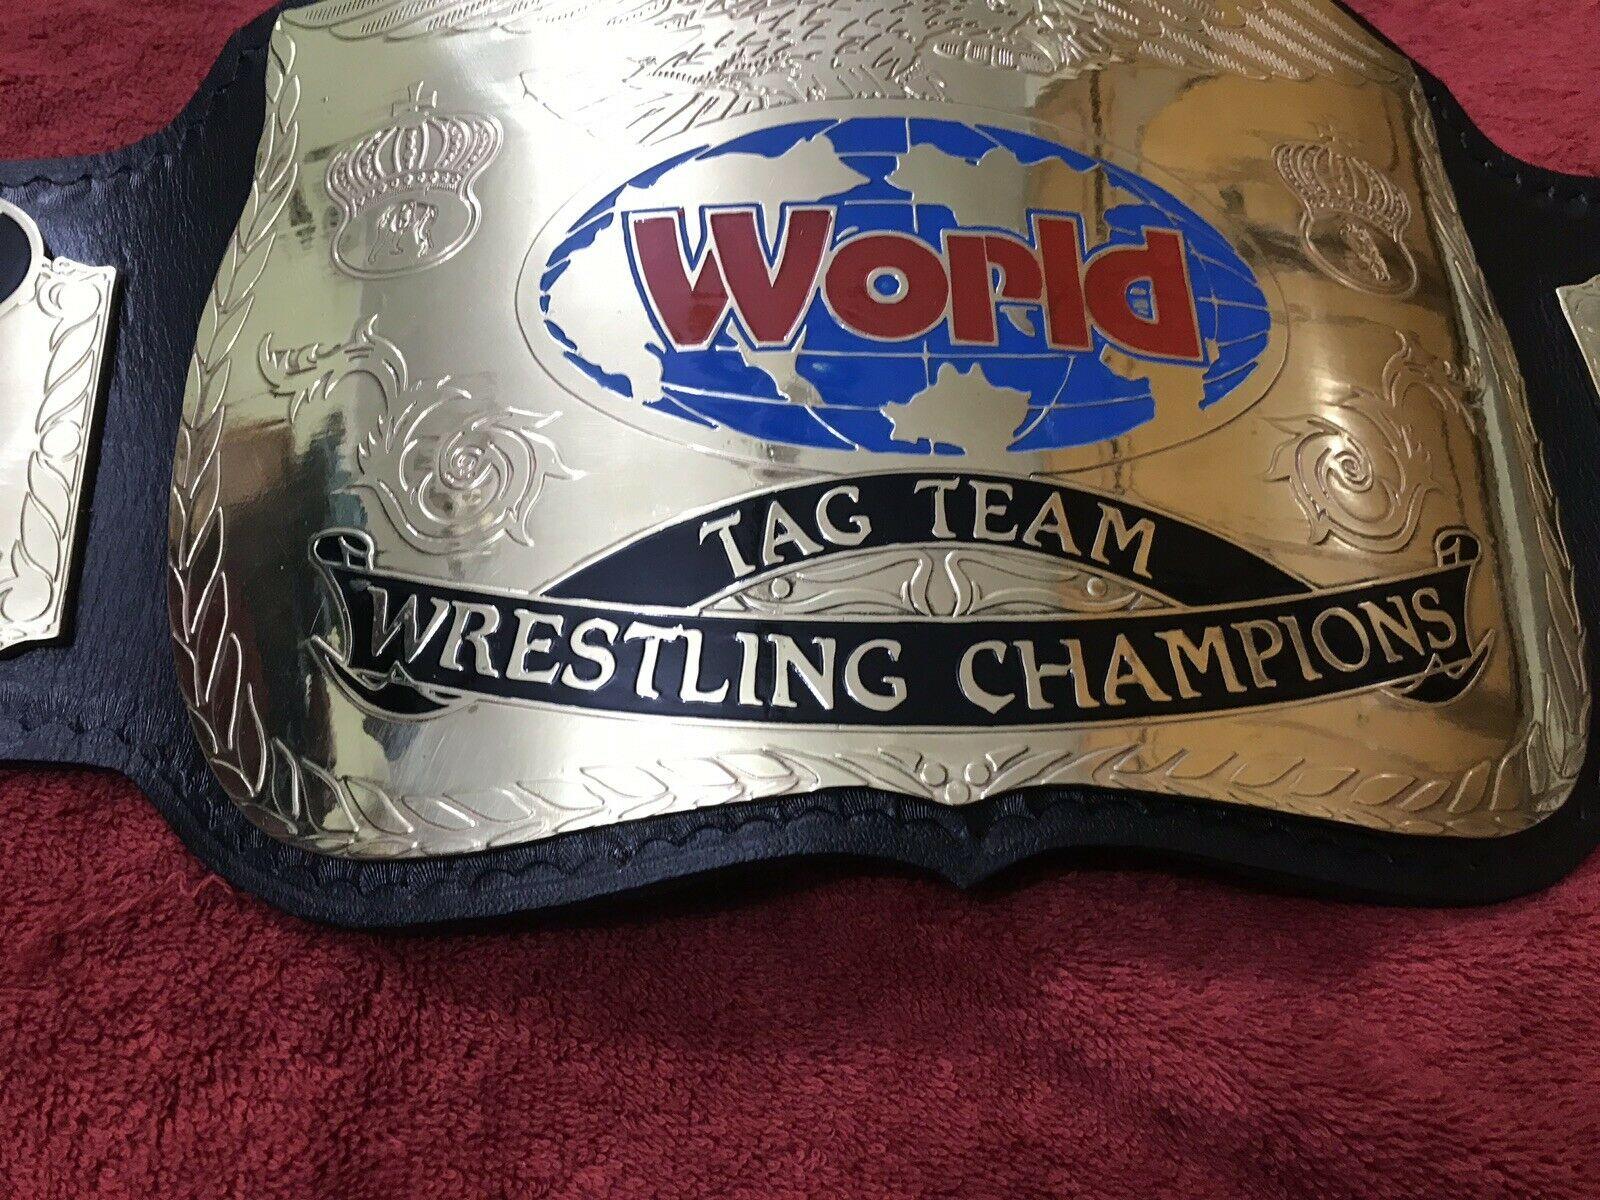 WWF WORLD TAG TEAM Brass Championship Replica Belt - Zees Belts